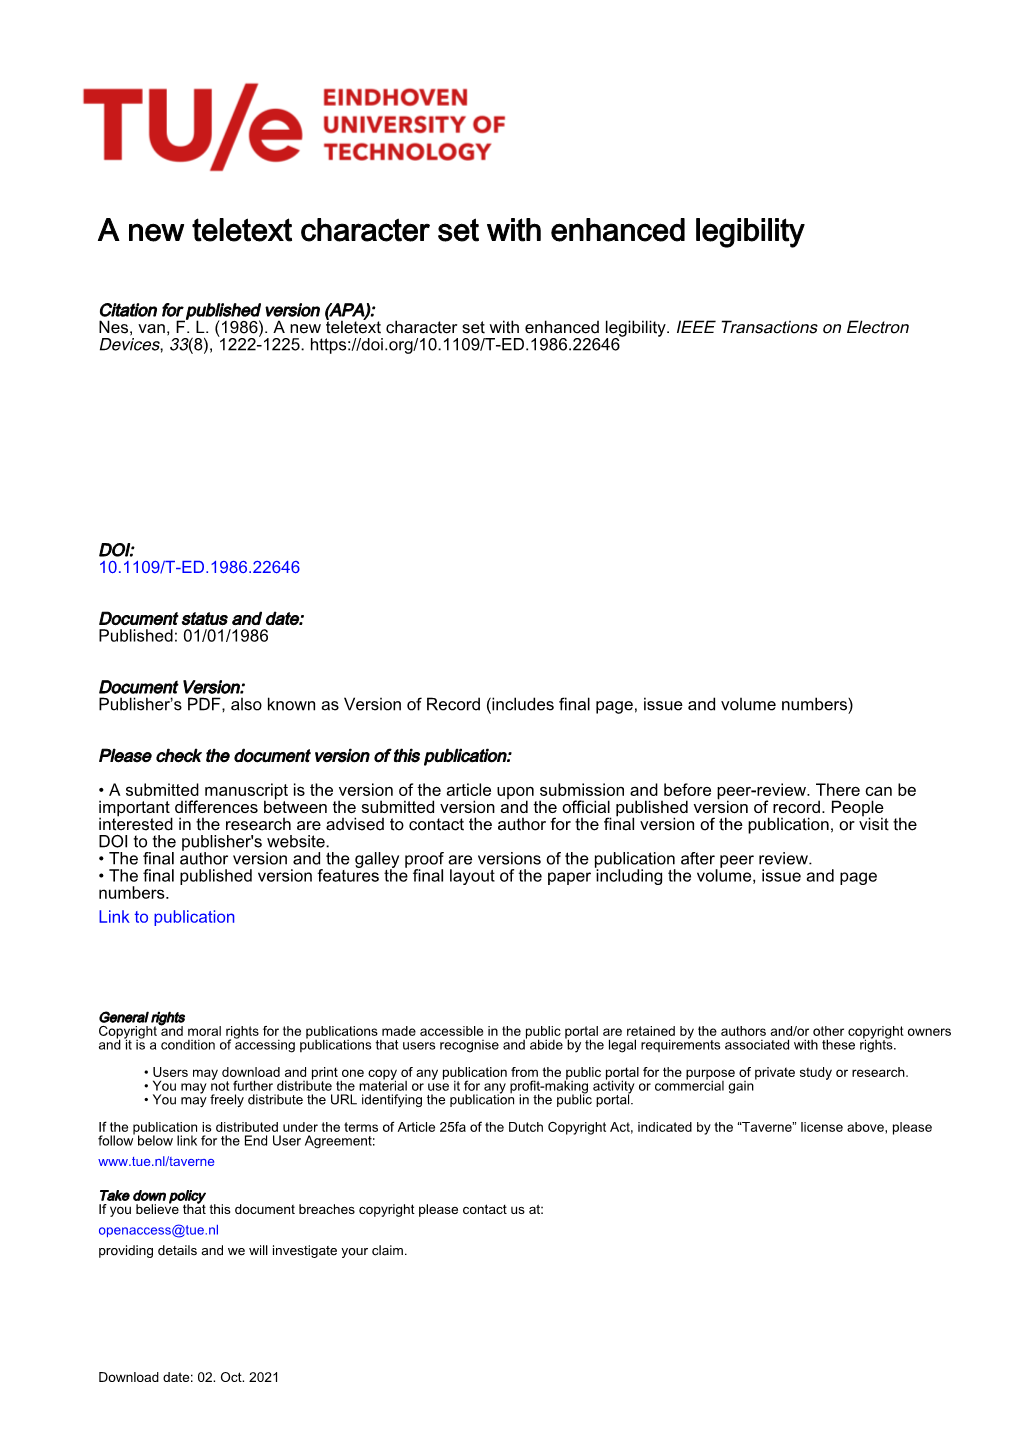 A New Teletext Character Set with Enhanced Legibility